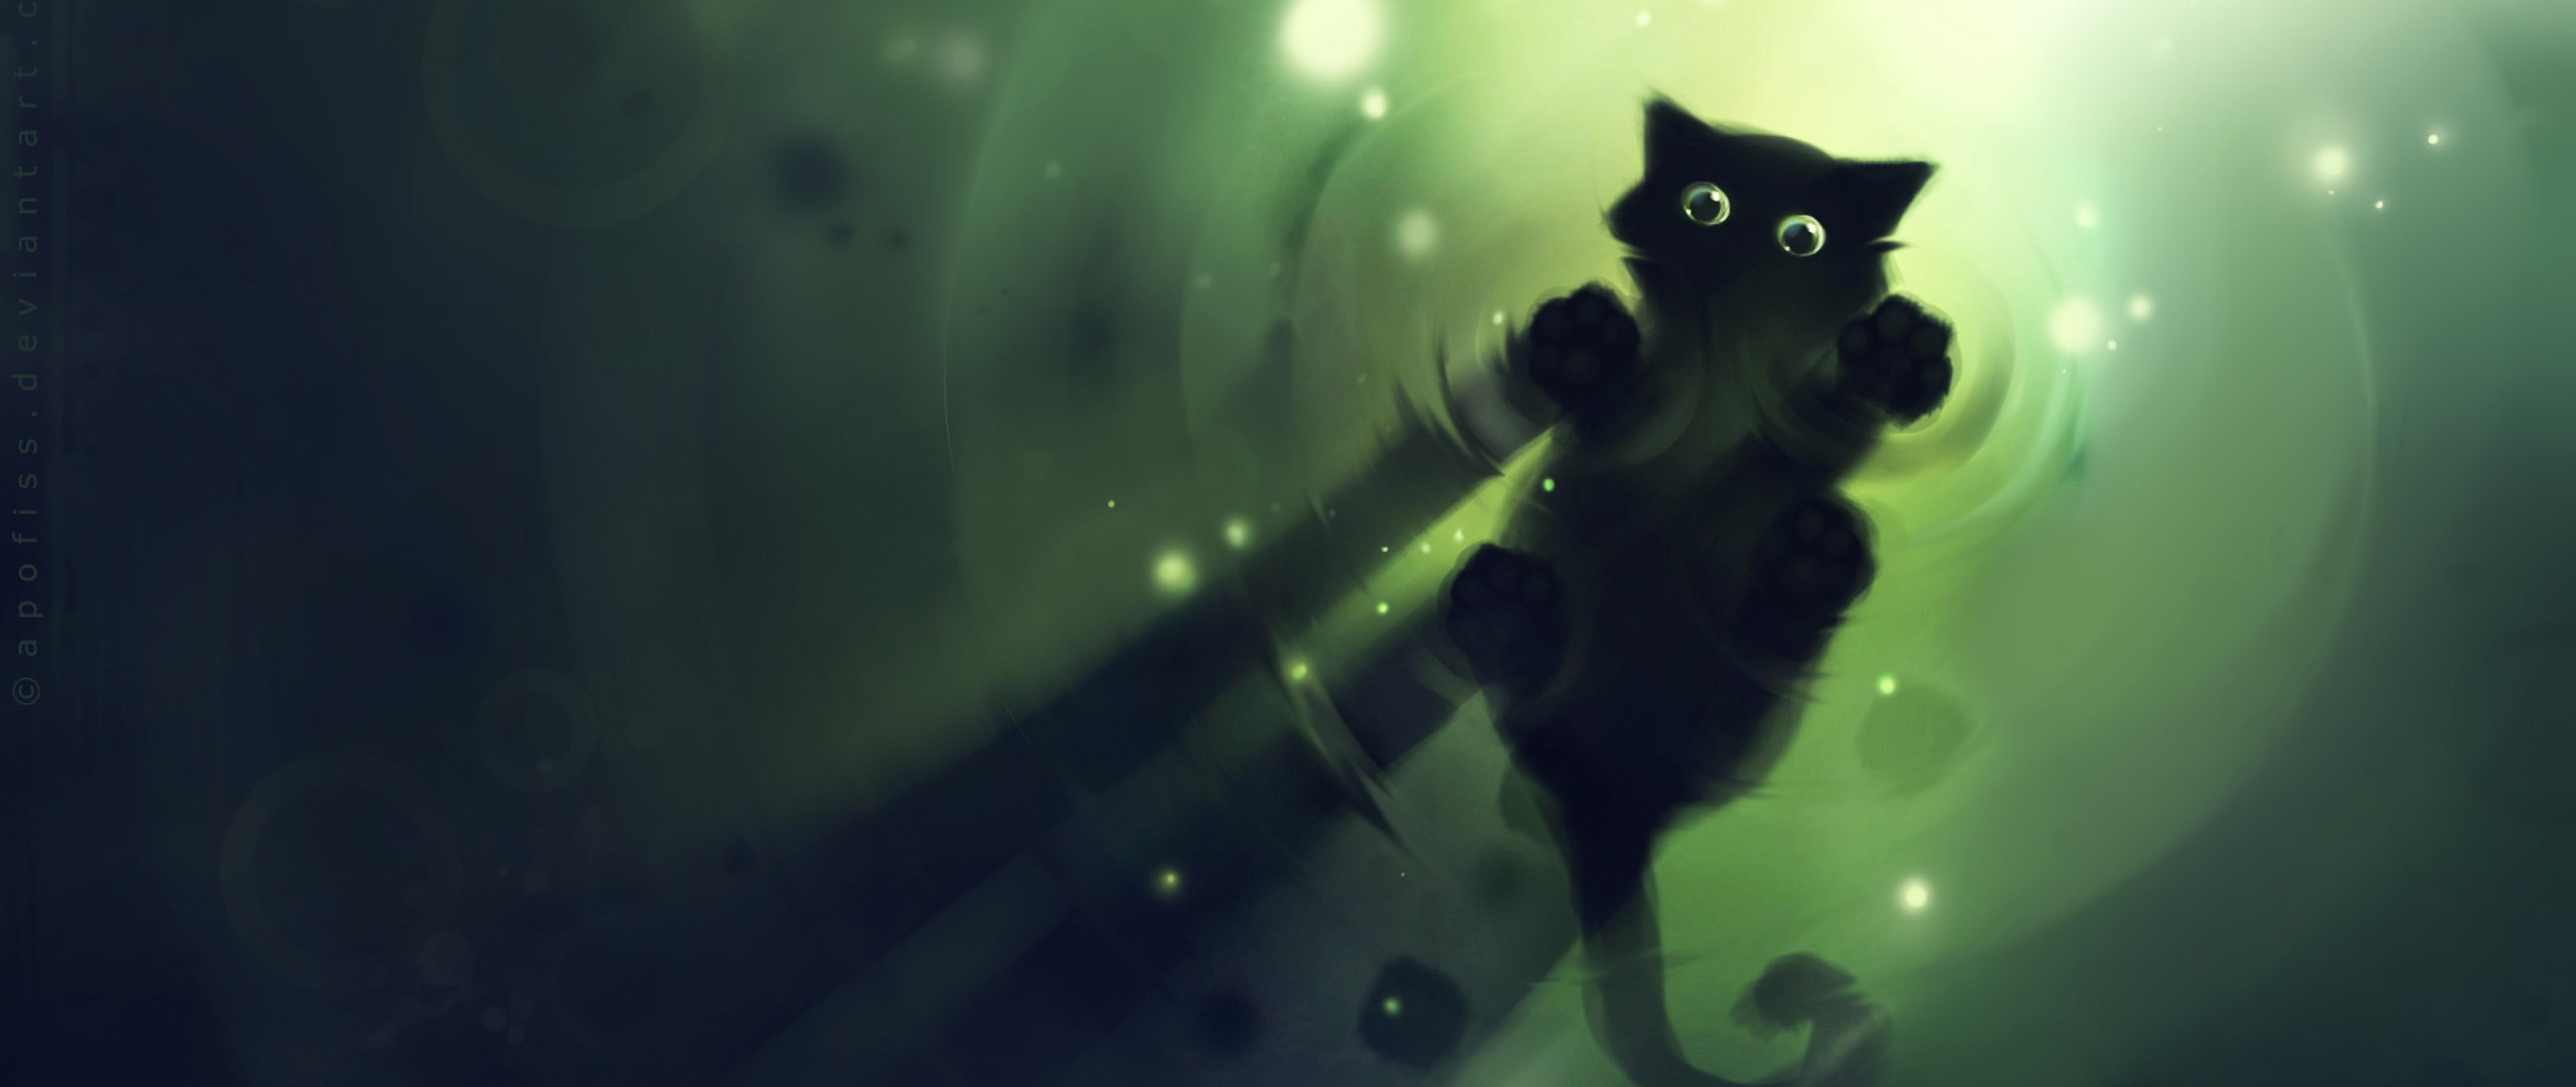 Cute Animated Cat Cartoon Background Wallpaper for Desktop